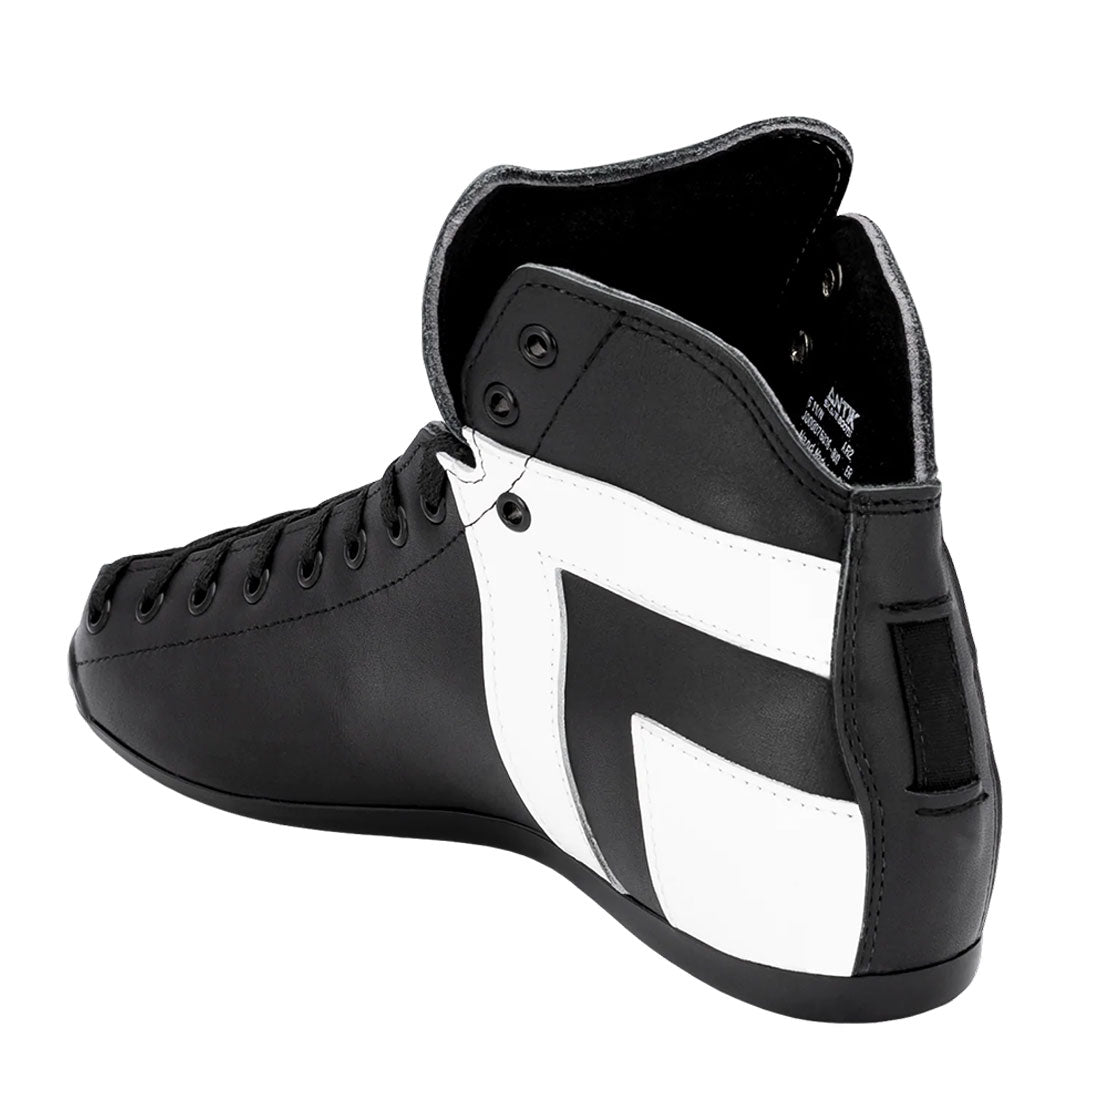 Antik AR2 Boot - Black Roller Skate Boots